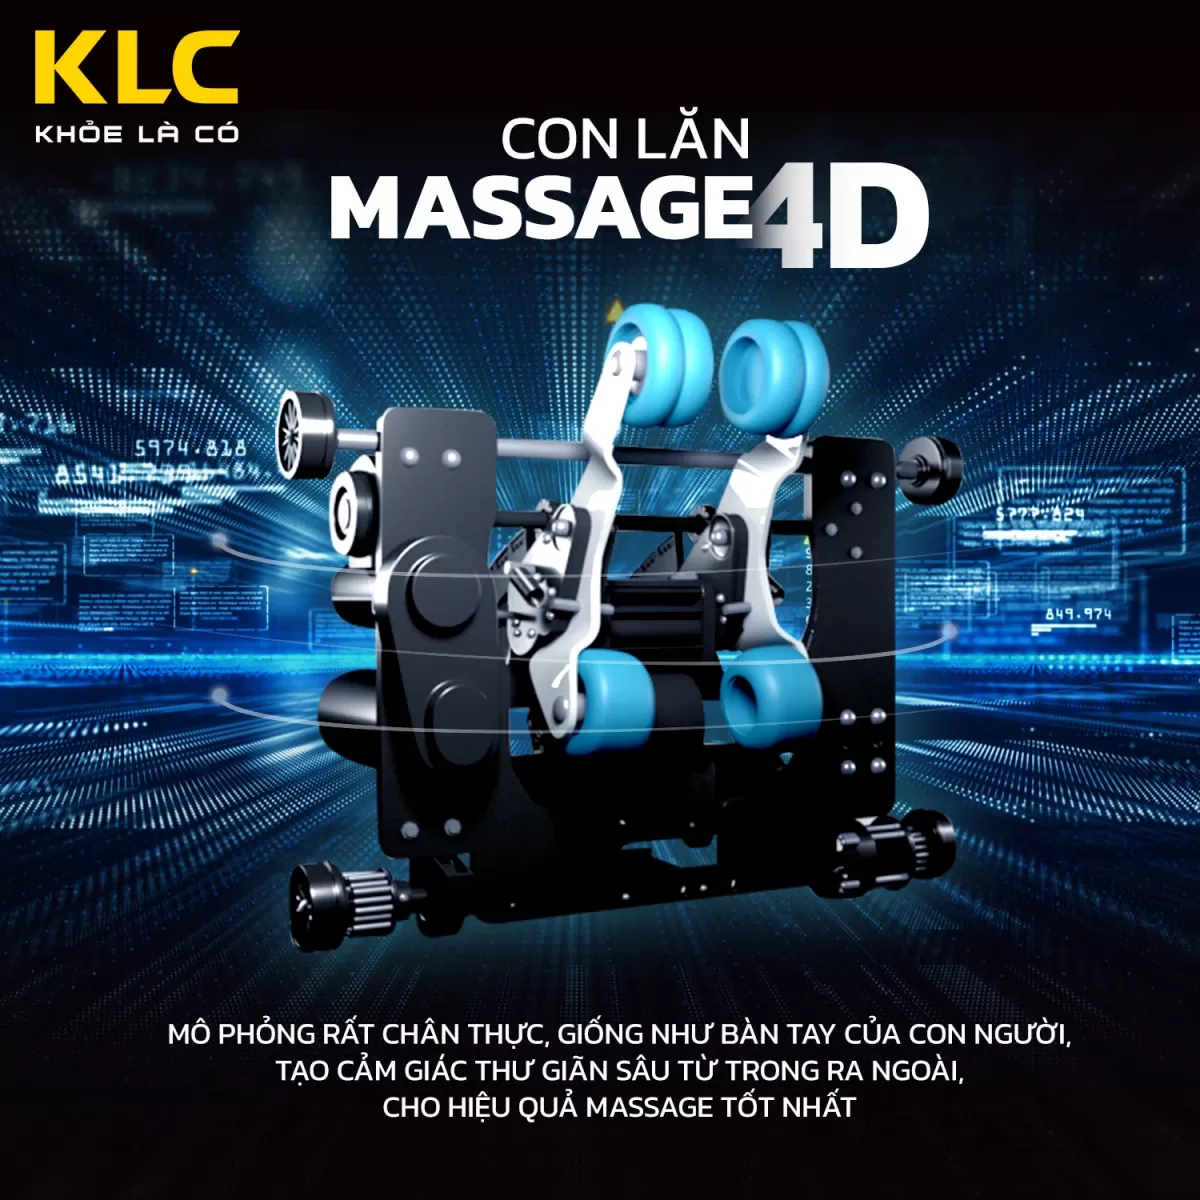 Con lăn 4D của Ghế Massage KLC K686